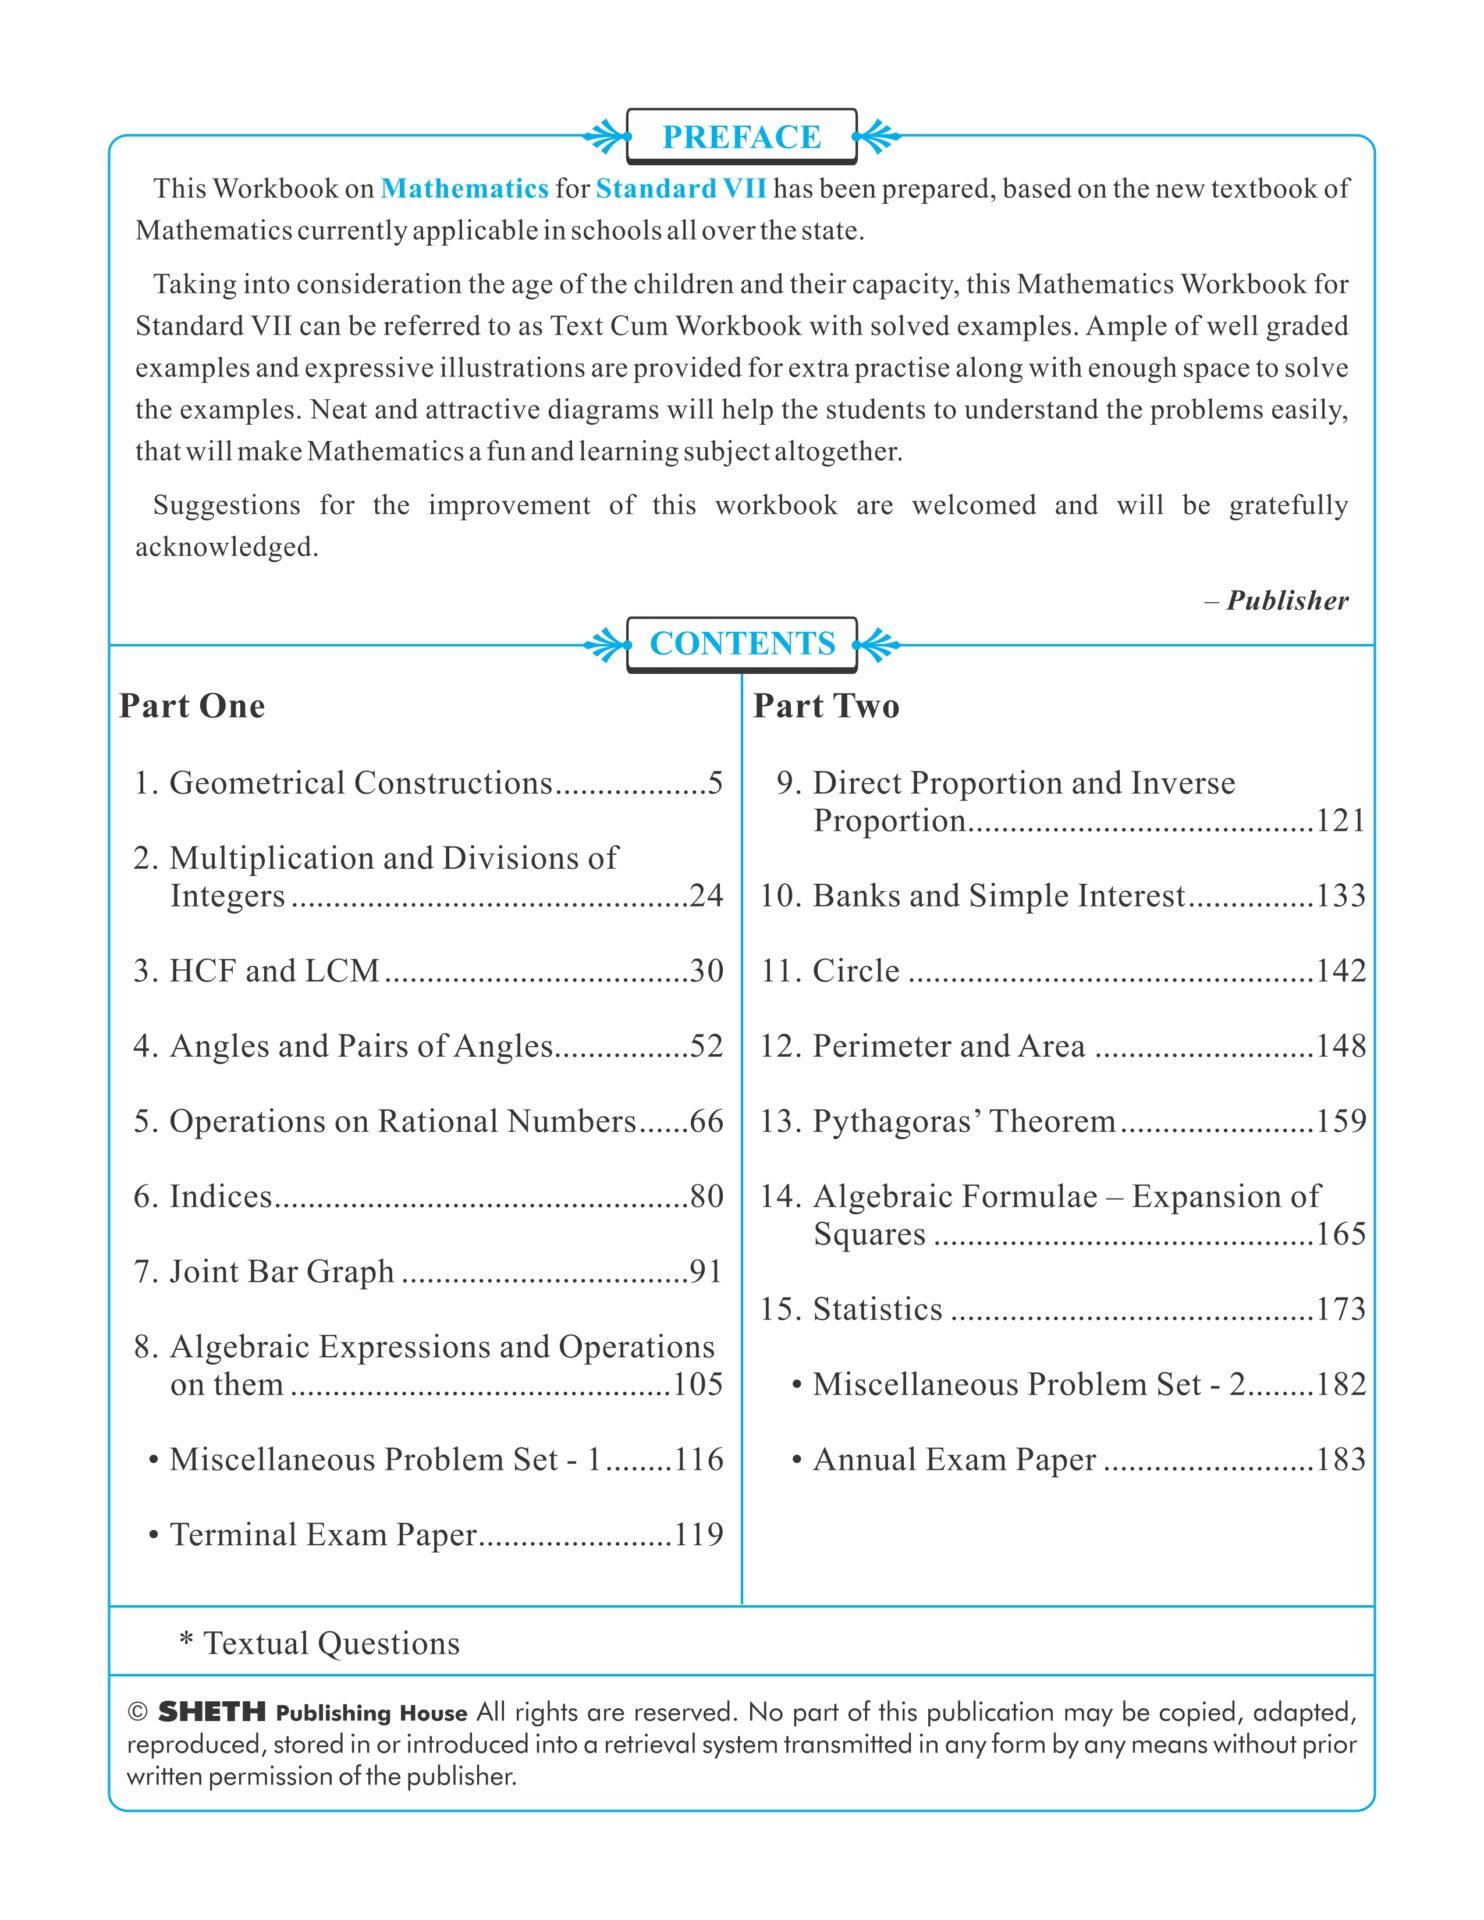 CCE Pattern Nigam Scholar Workbooks Mathematics Standard 7 2